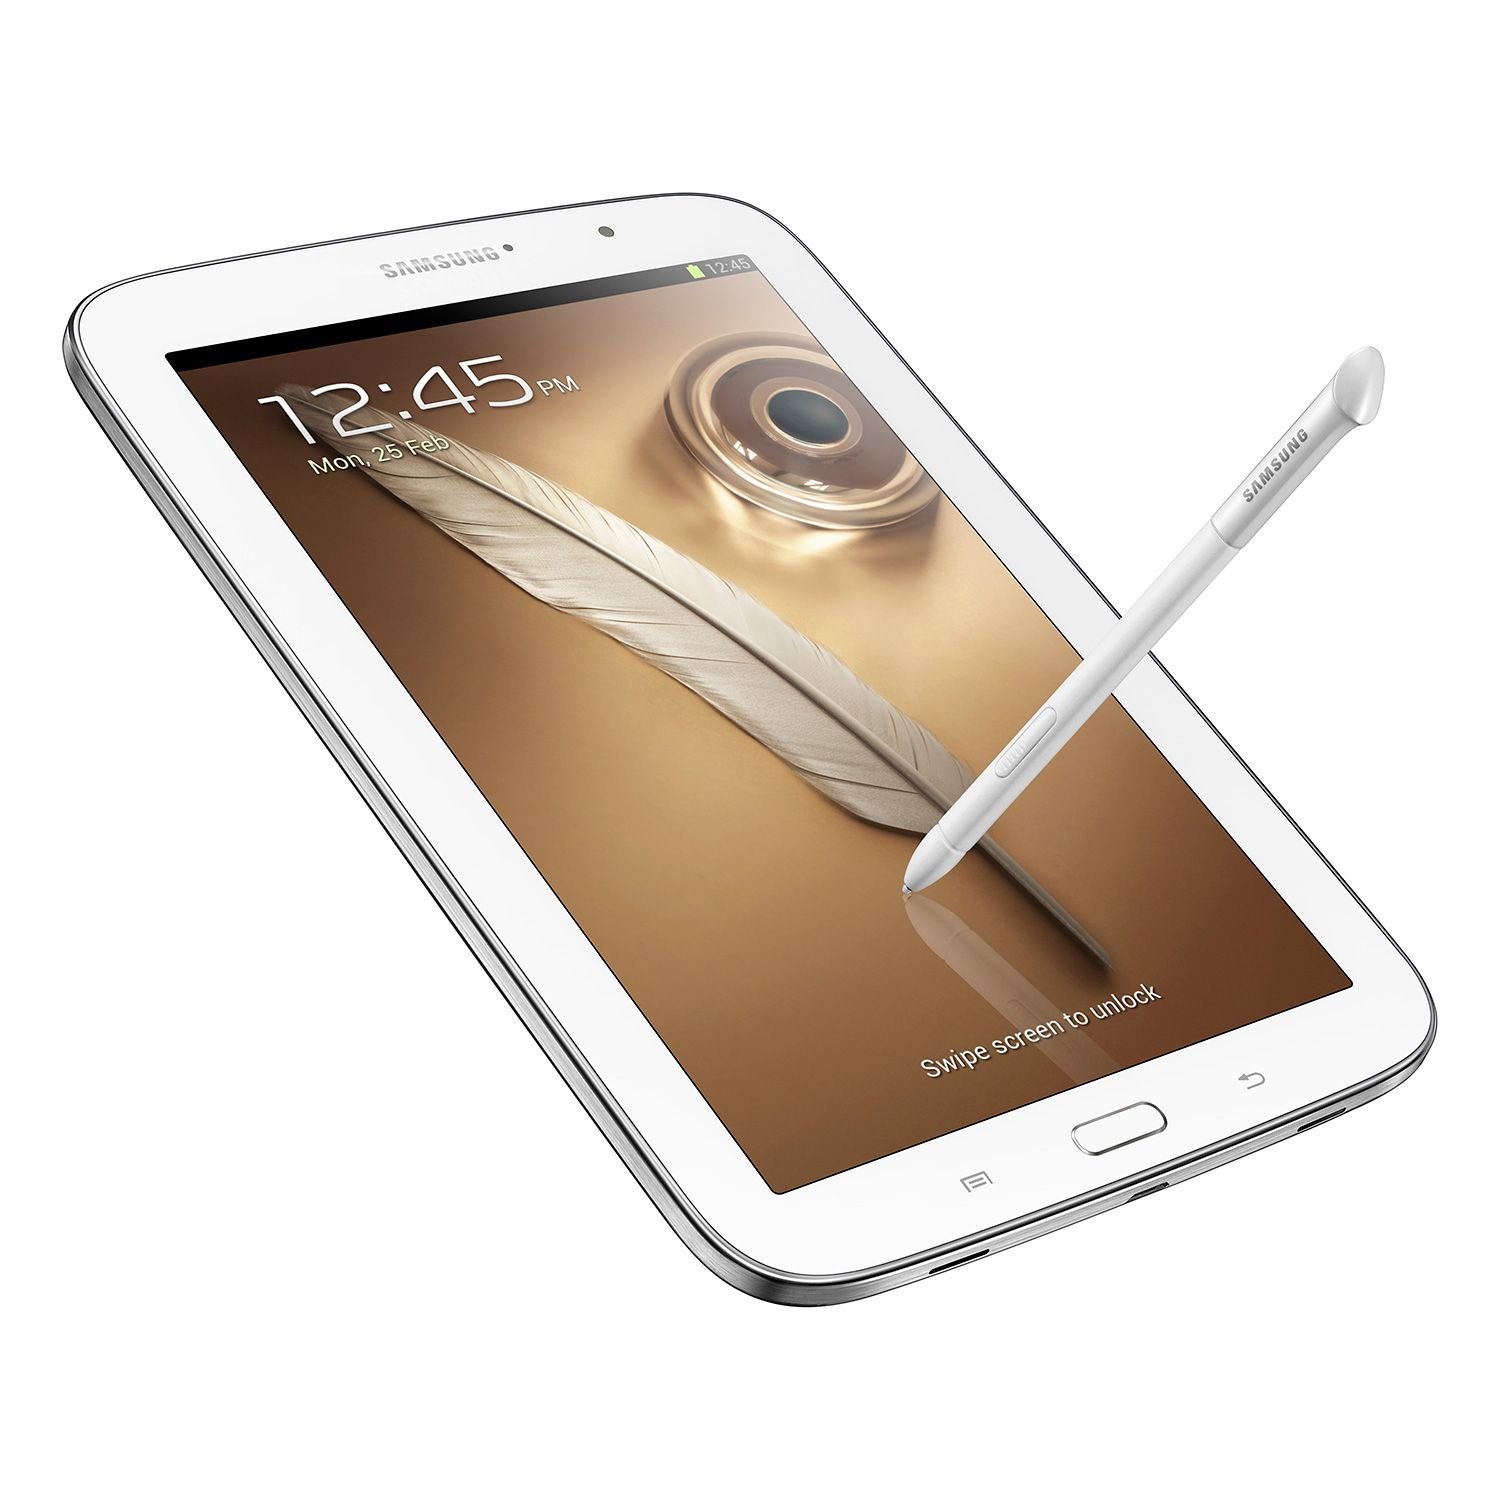 Samsung Galaxy Note 8.0 N5110 16GB - White